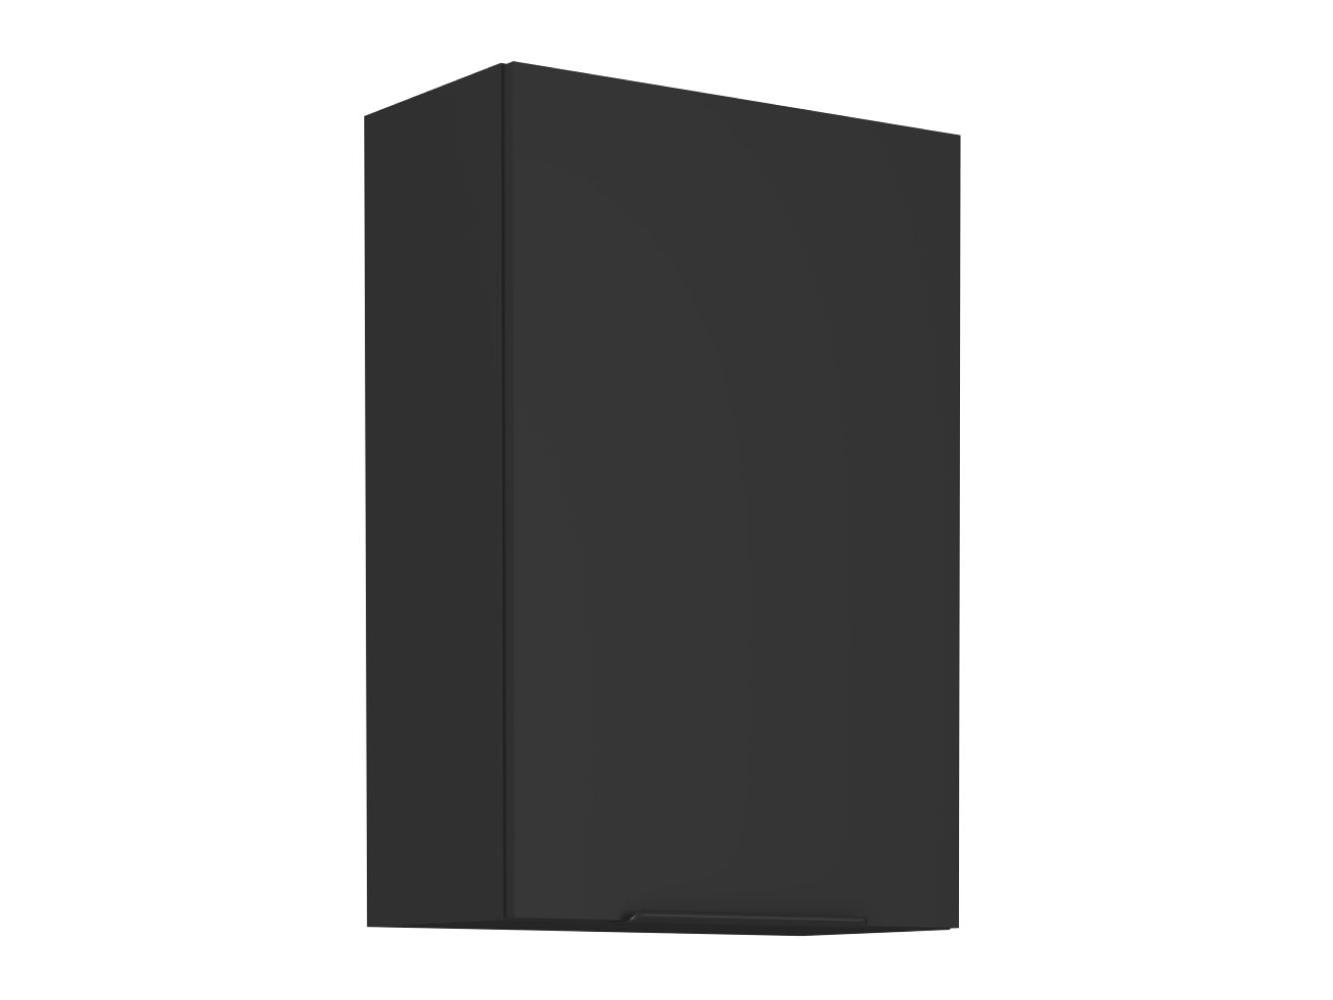 Horní kuchyňská skříňka Sobera 60 G 90 1F (černá)